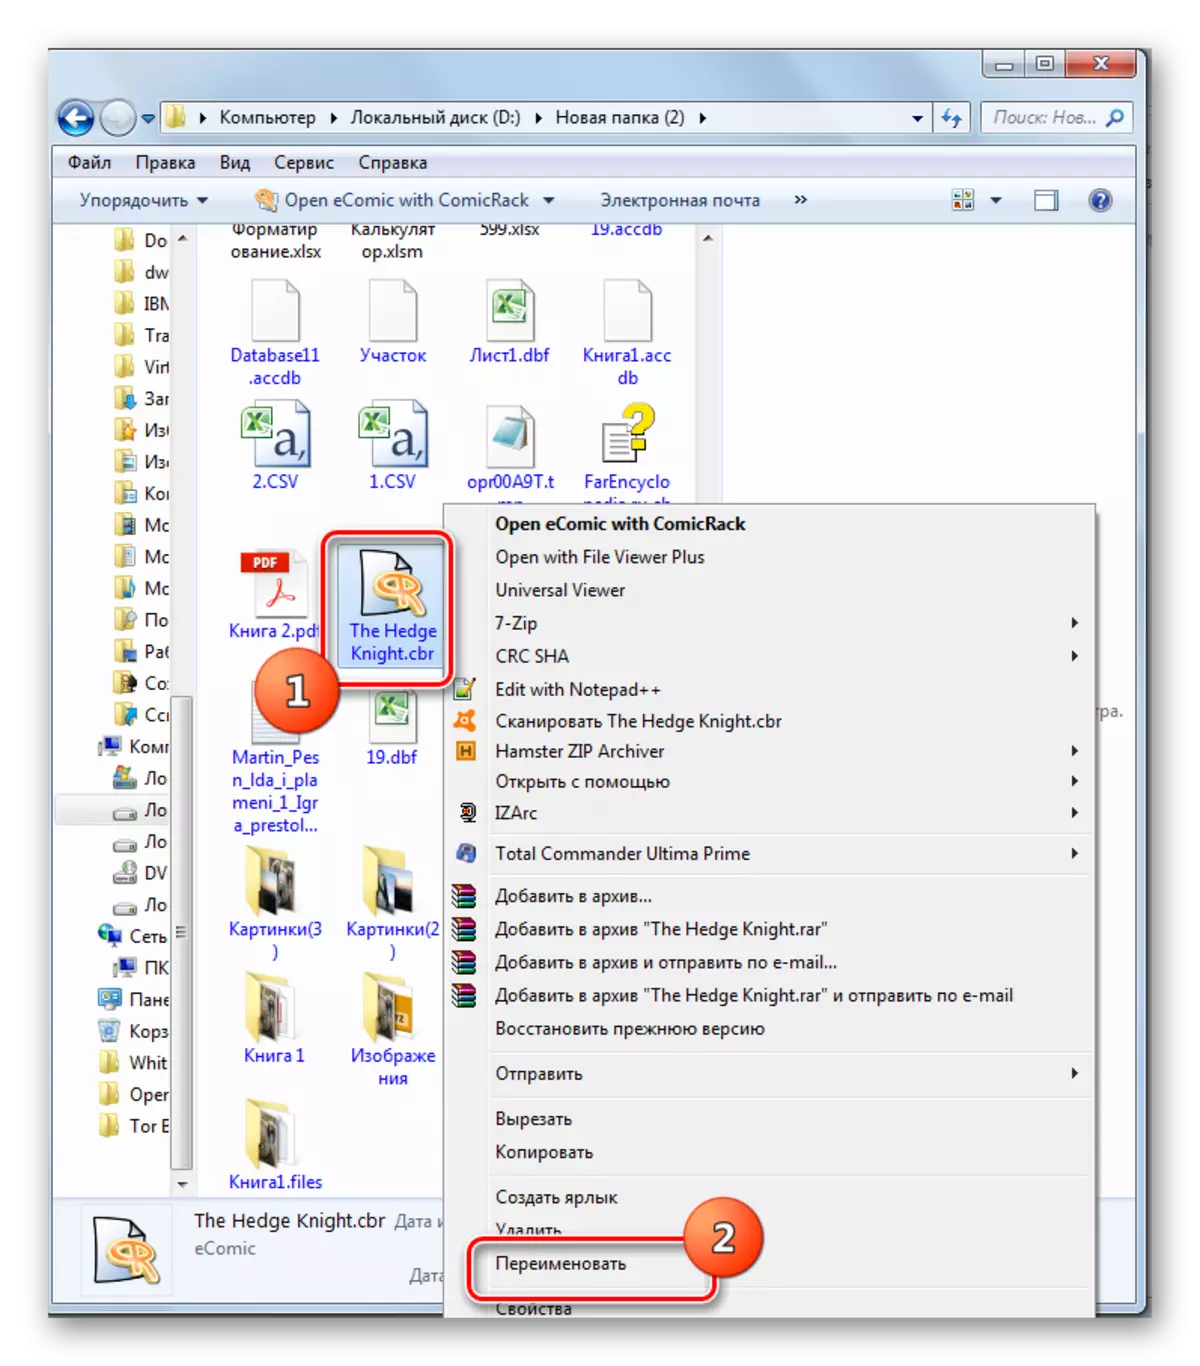 Windows 7 دە Explorer دىكى مەزمۇن تىزىملىكى ئارقىلىق ھۆججەتنى ئۆزگەرتىش ئۈچۈن بېرىڭ